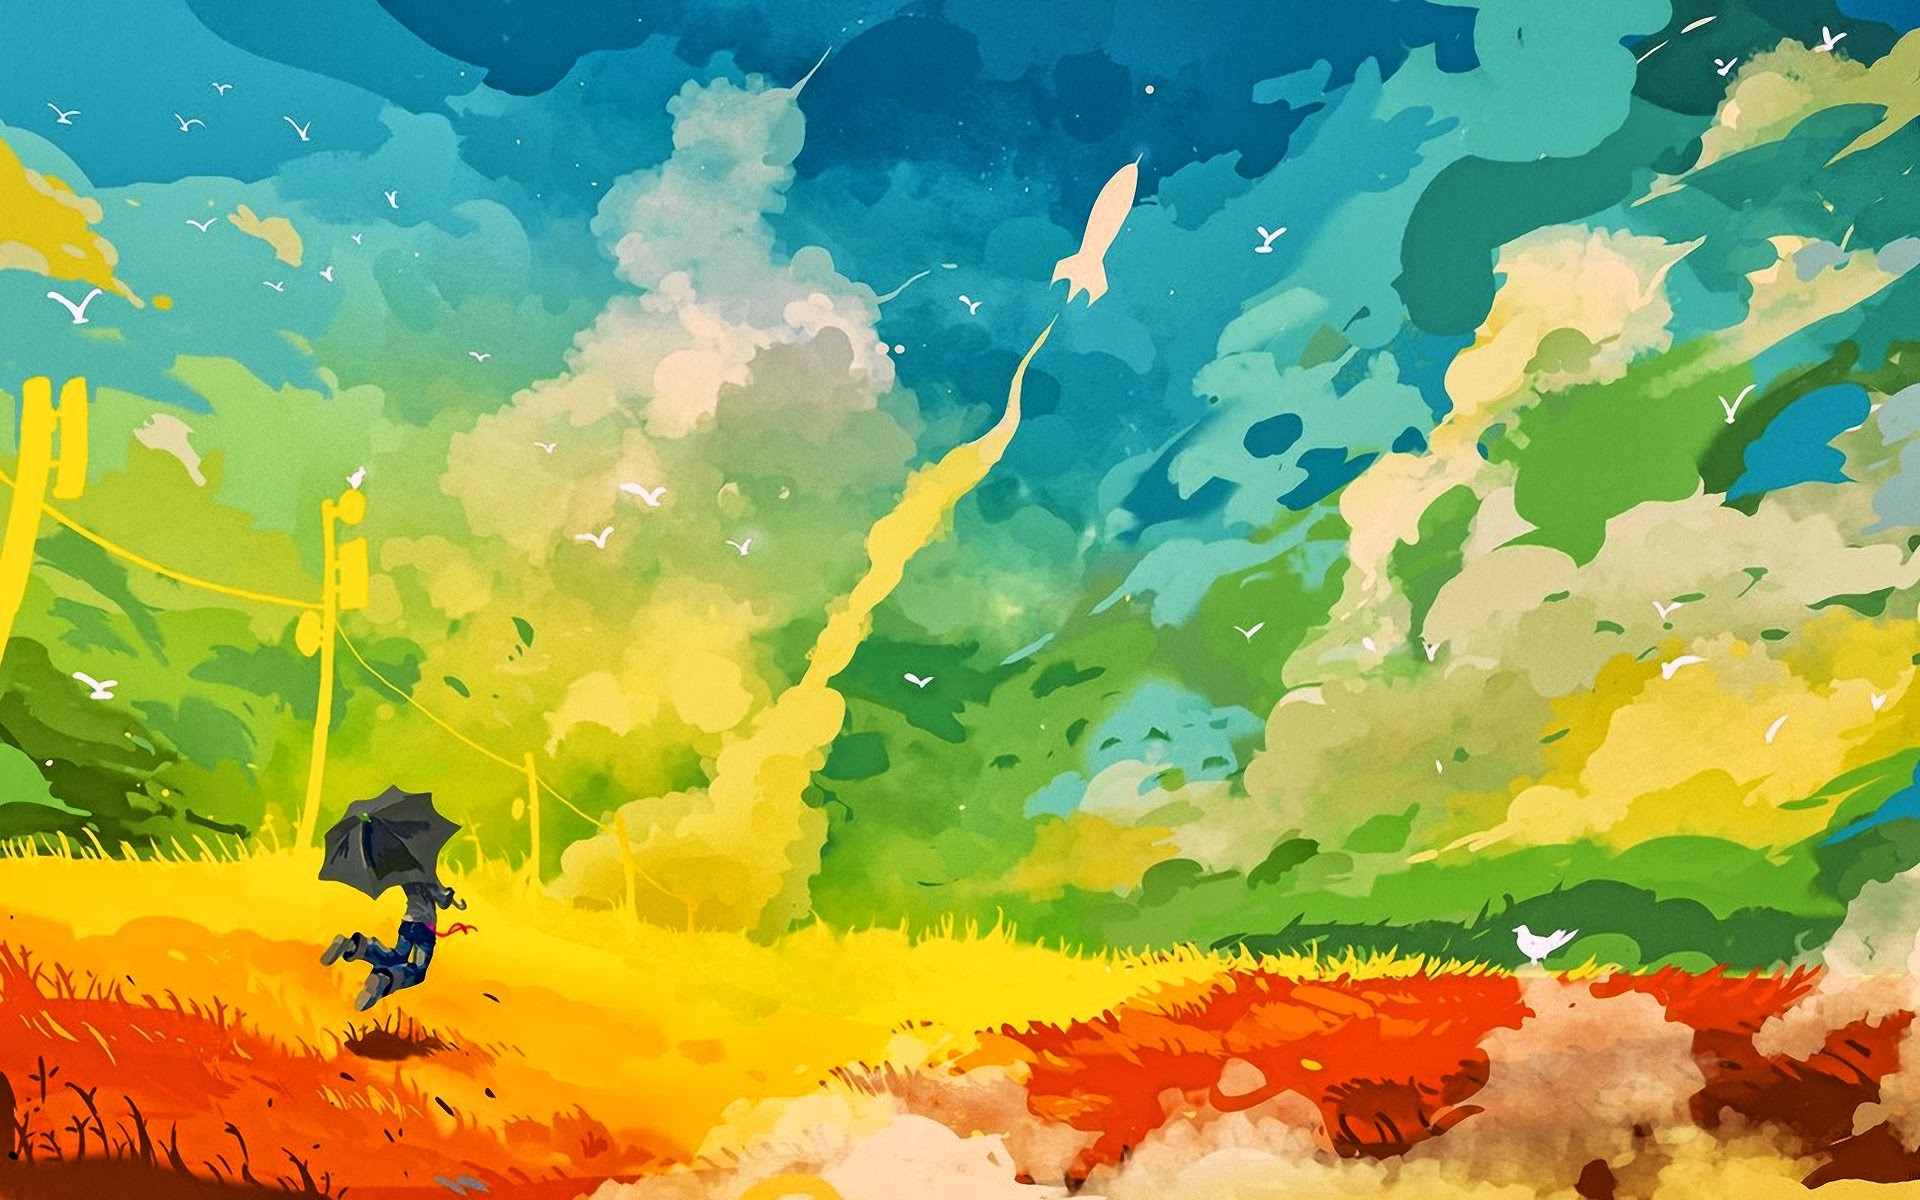 Wallpaper sunlight painting illustration fantasy art anime sky umbrella wind rocket flower meadow puter wallpaper modern art ecosystem acrylic paint watercolor paint impressionist x